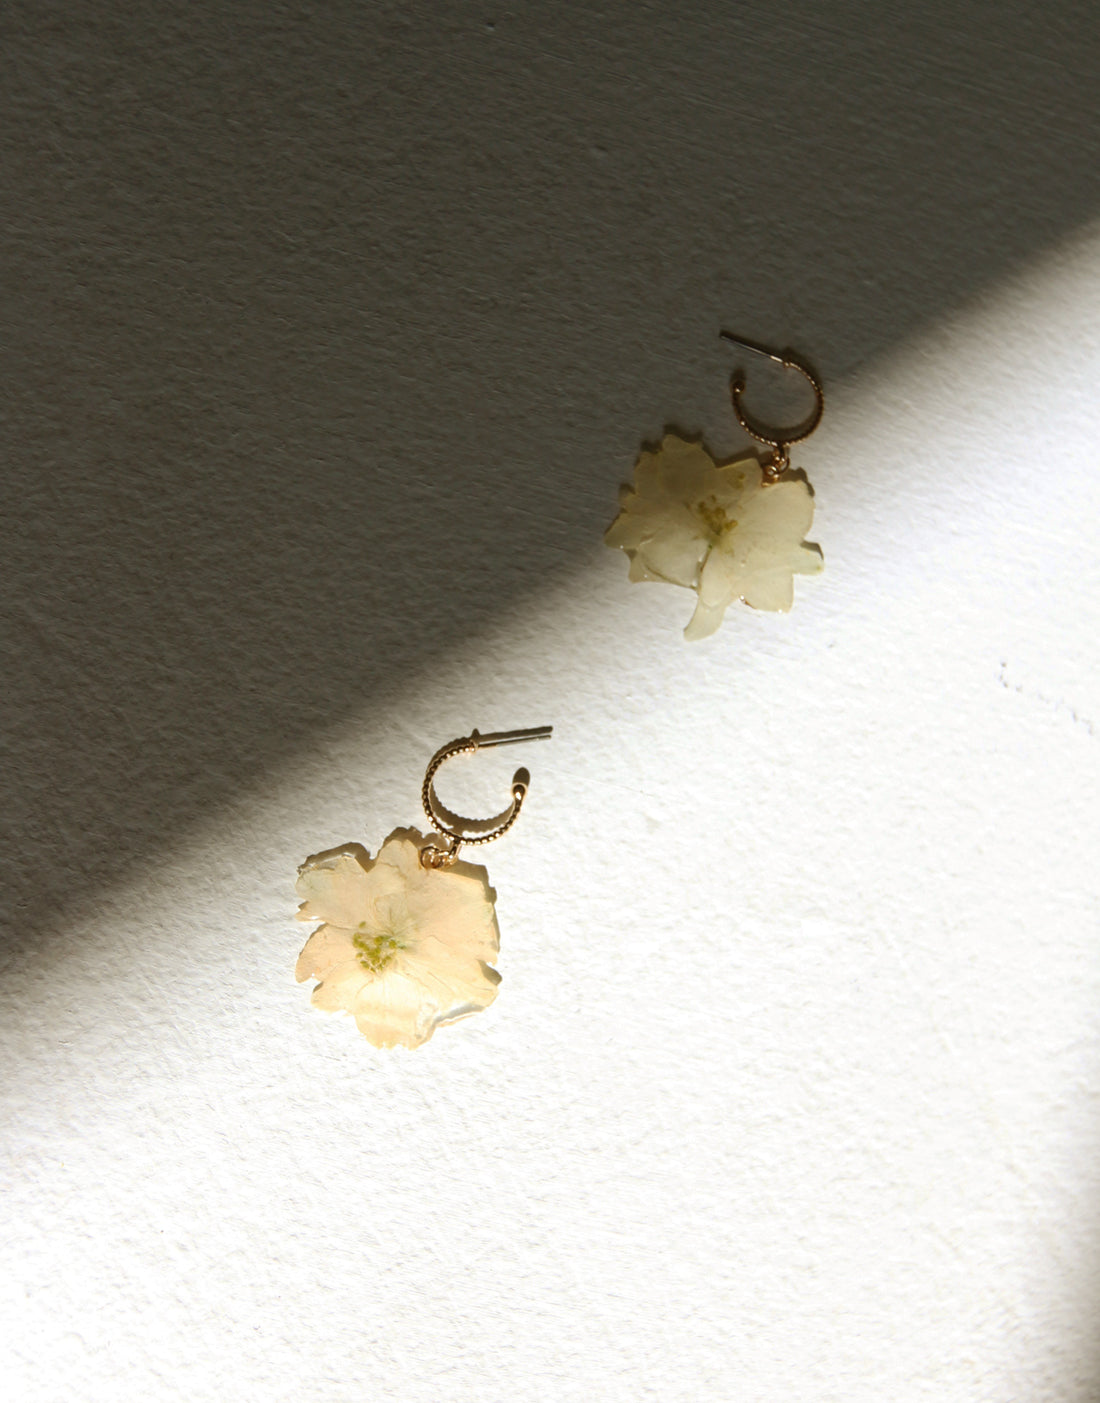 Pressed Flower Resin Earrings Jewelry -2020AVE